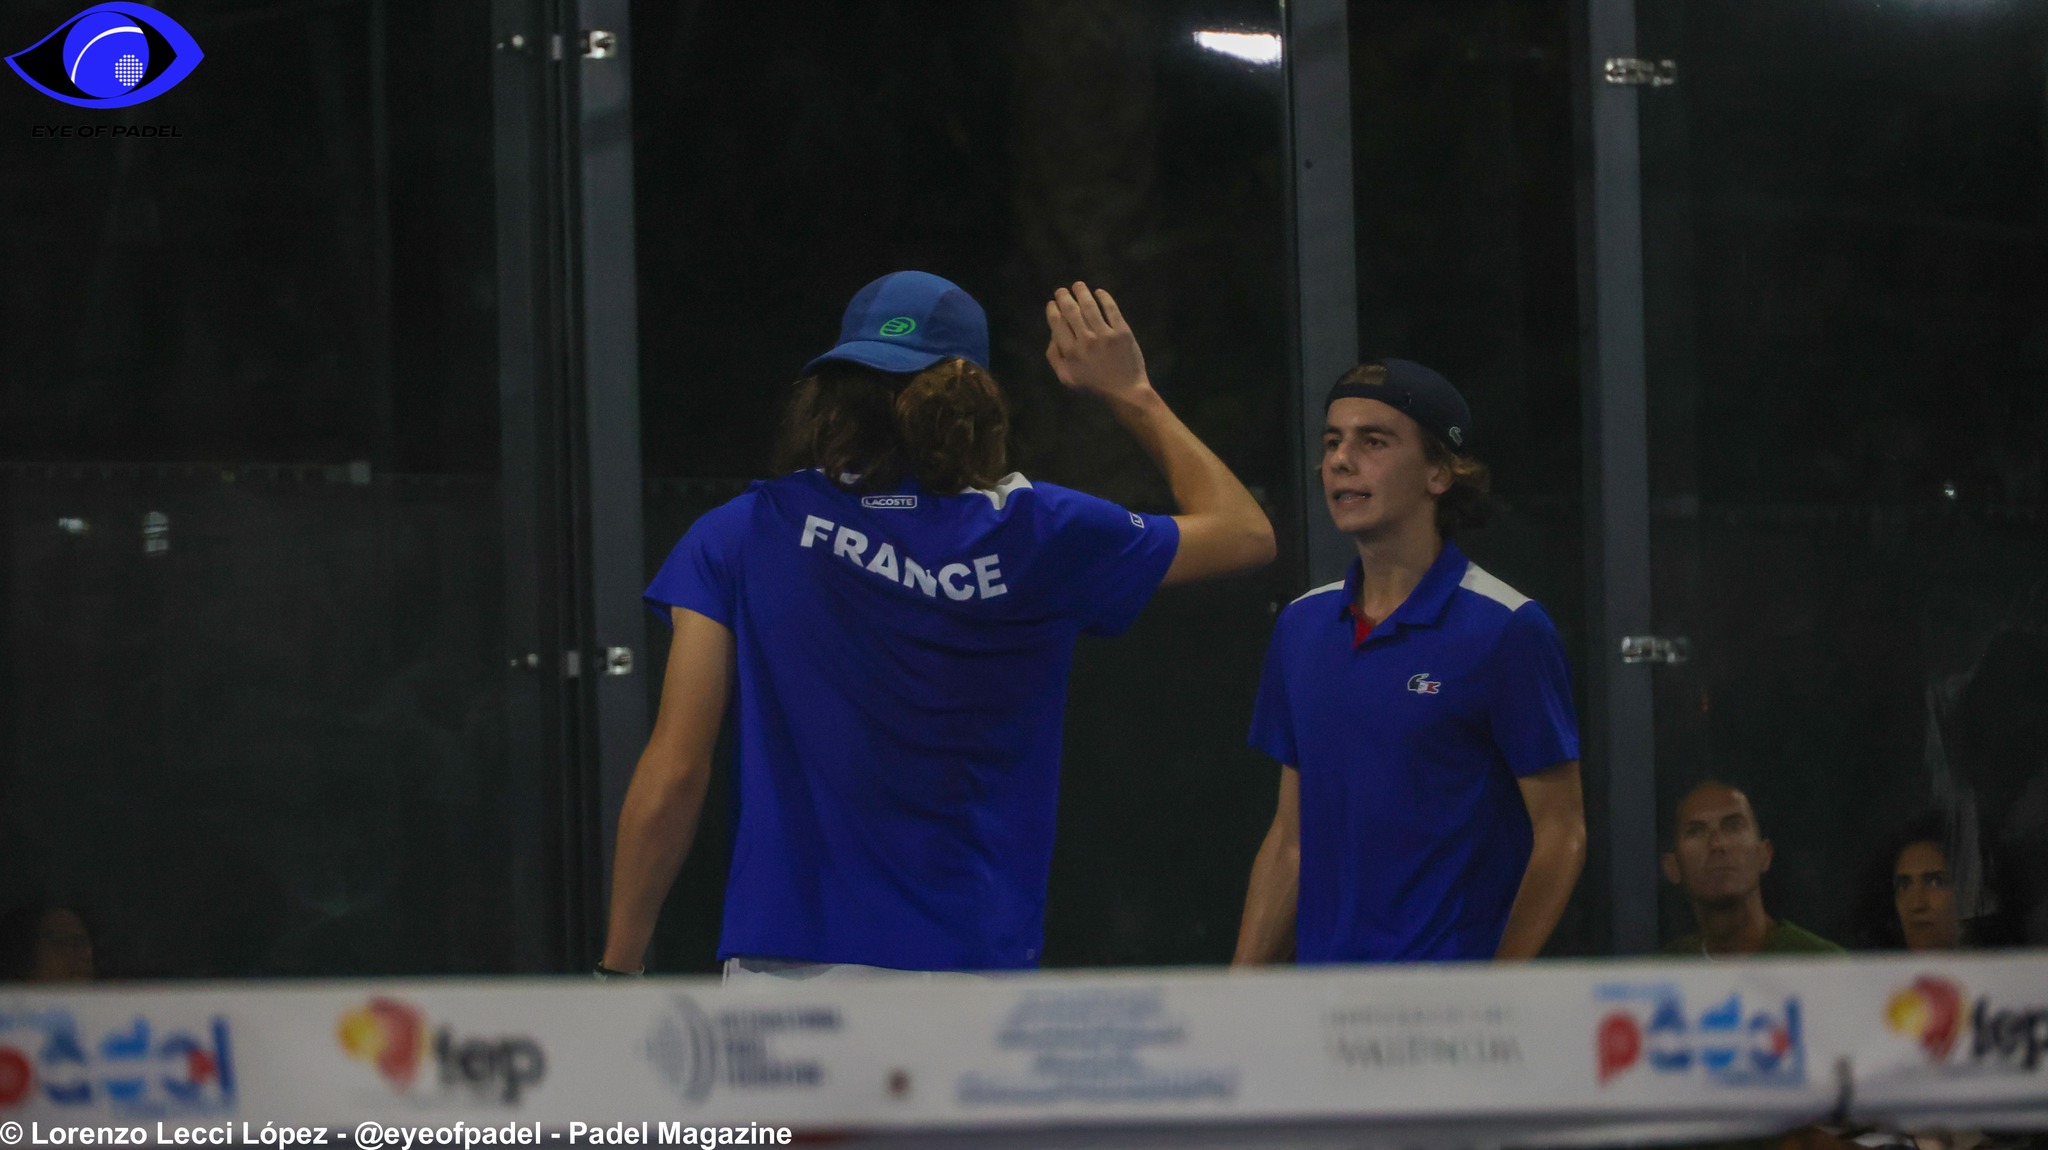 Campionat d'Europa júnior en DIRECTE: França - Holanda (M)